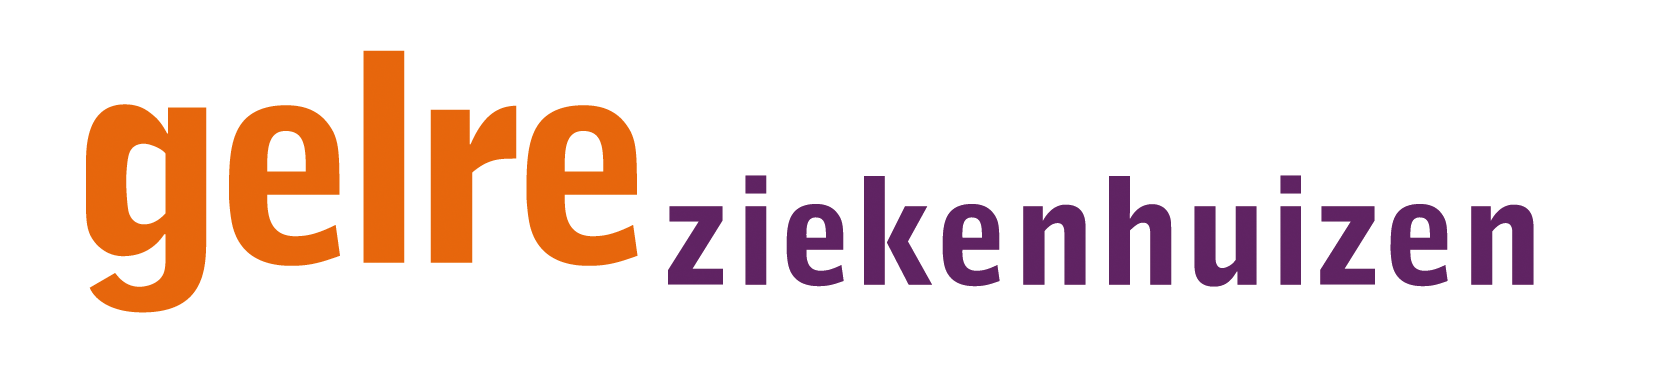 20210129-466732022-Logo-woordmerk-Gelre-ziekenhuizen-rgb